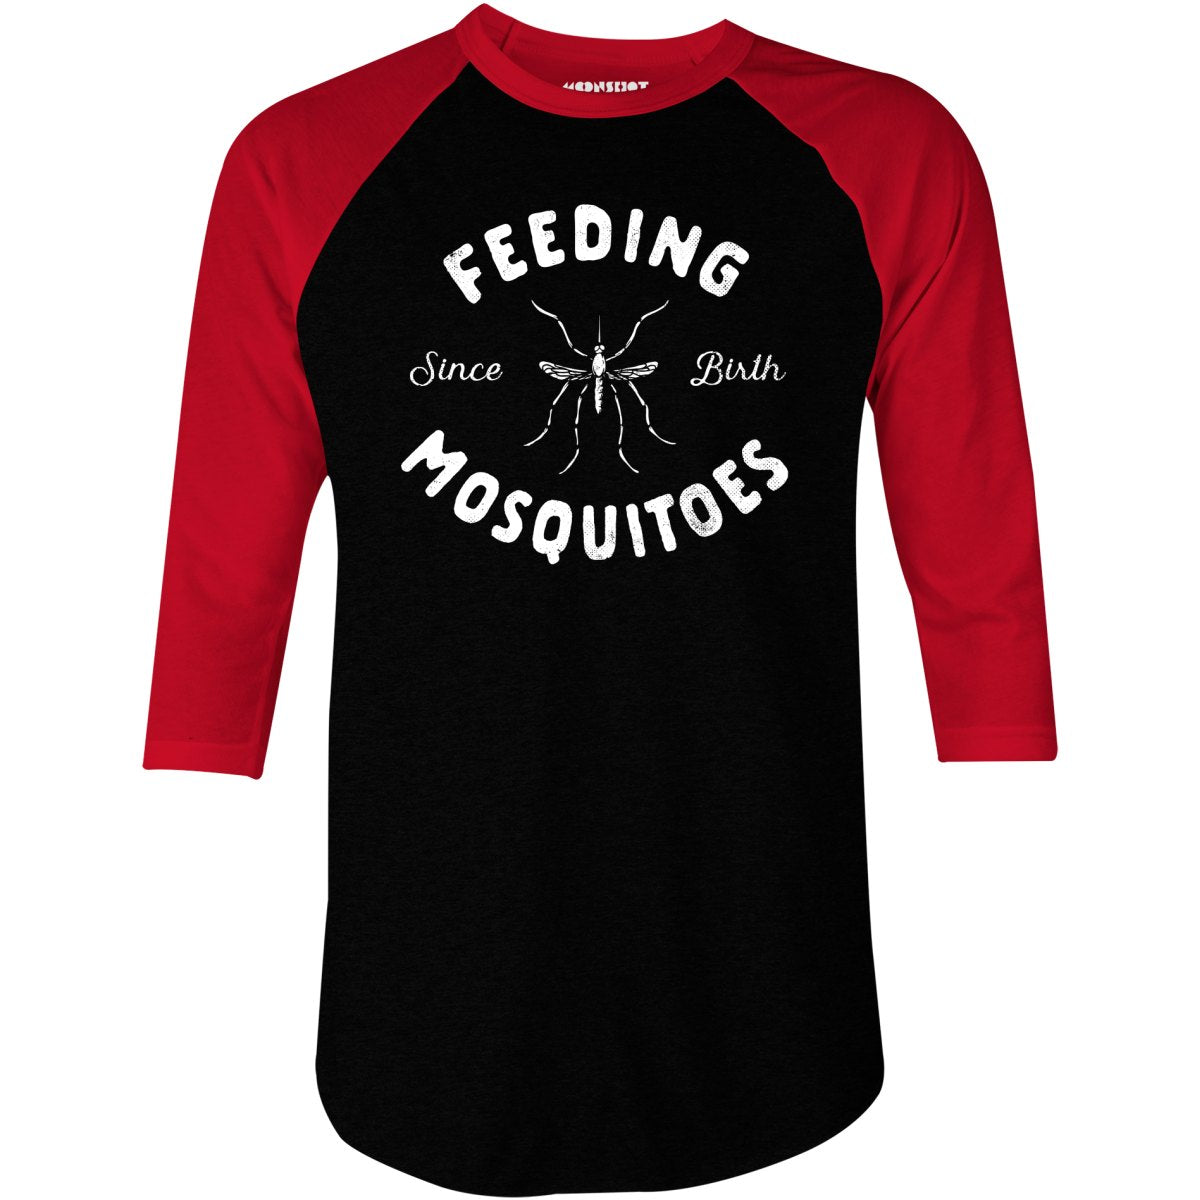 Feeding Mosquitoes Since Birth - 3/4 Sleeve Raglan T-Shirt